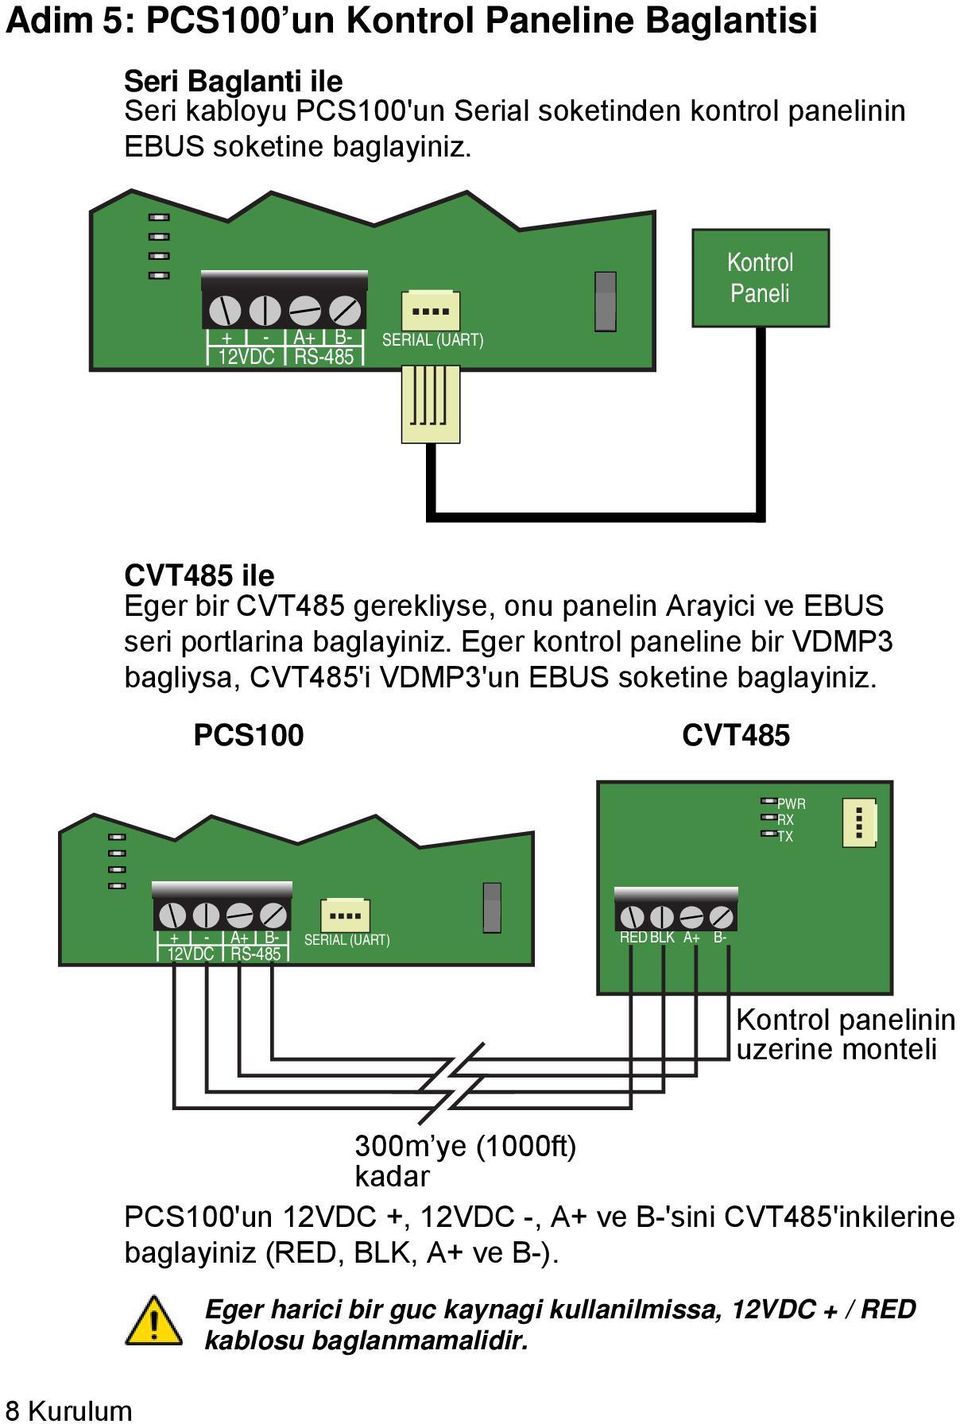 Eger kontrol paneline bir VDMP3 bagliysa, CVT485'i VDMP3'un EBUS soketine baglayiniz.